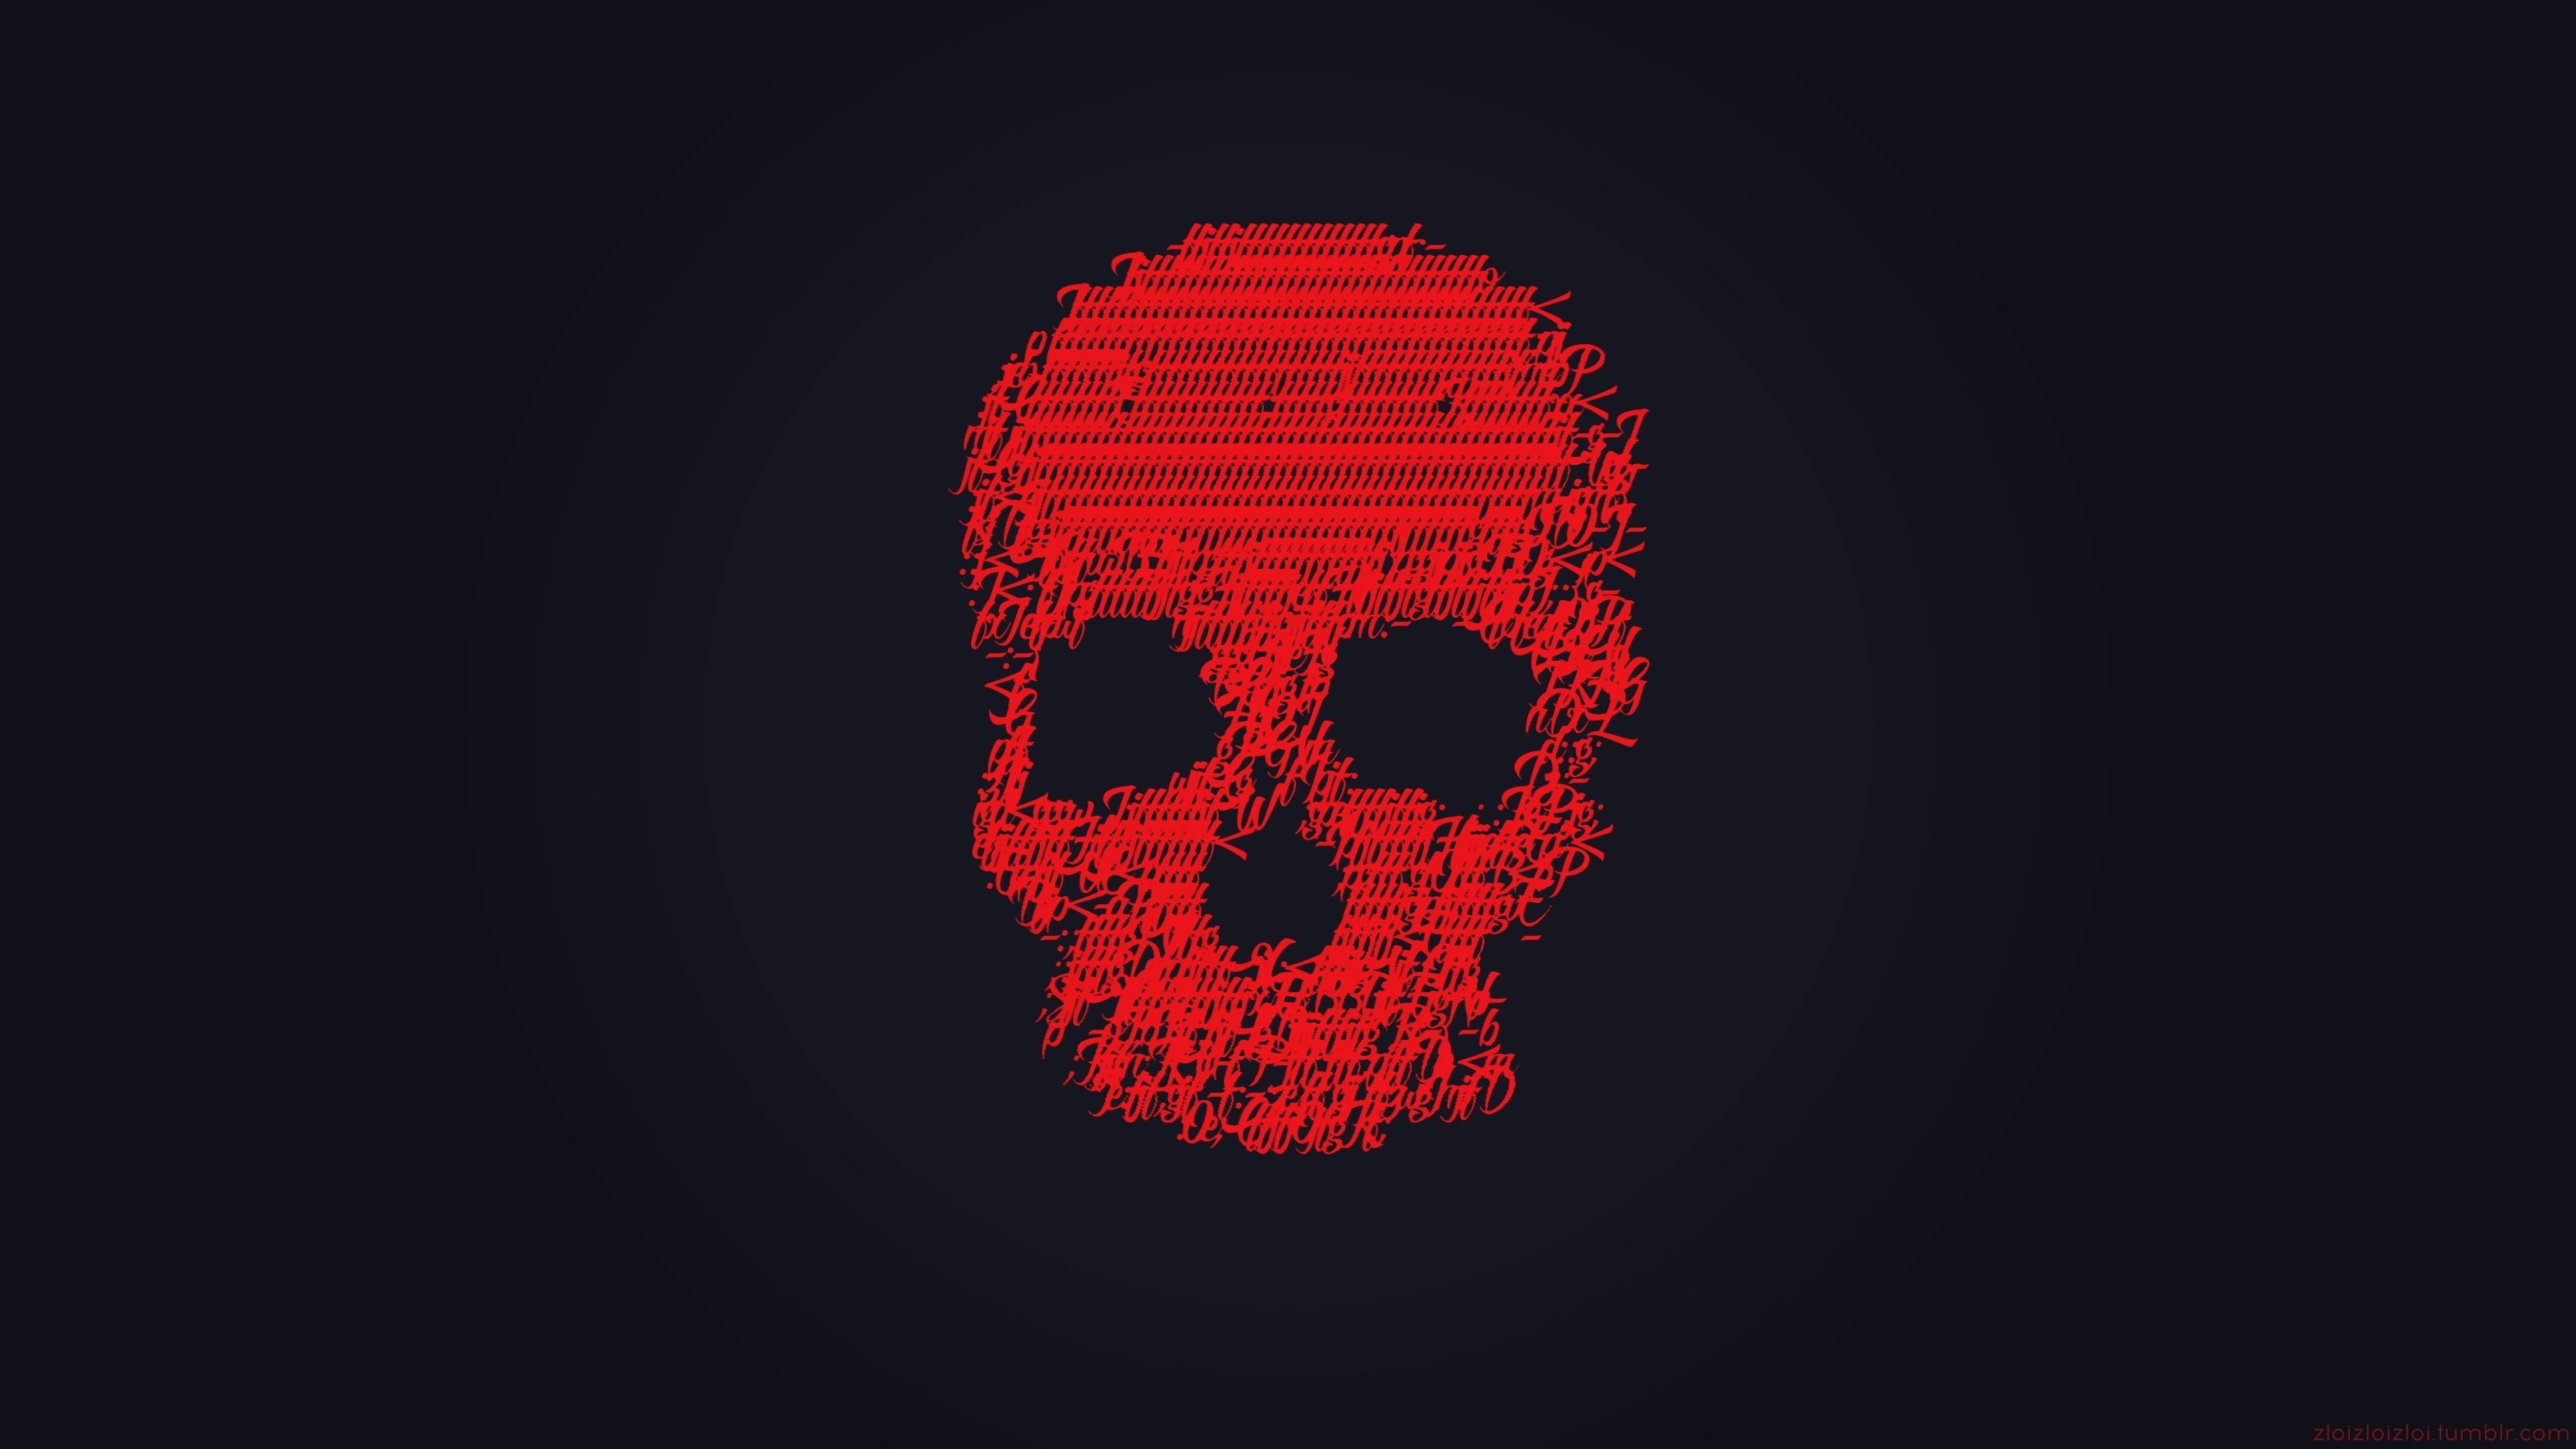 Download 3840x2160 wallpaper skull, glitch art, minimal, dark red, 4k, uhd 16: widescreen, 3840x2160 HD image, background, 6682